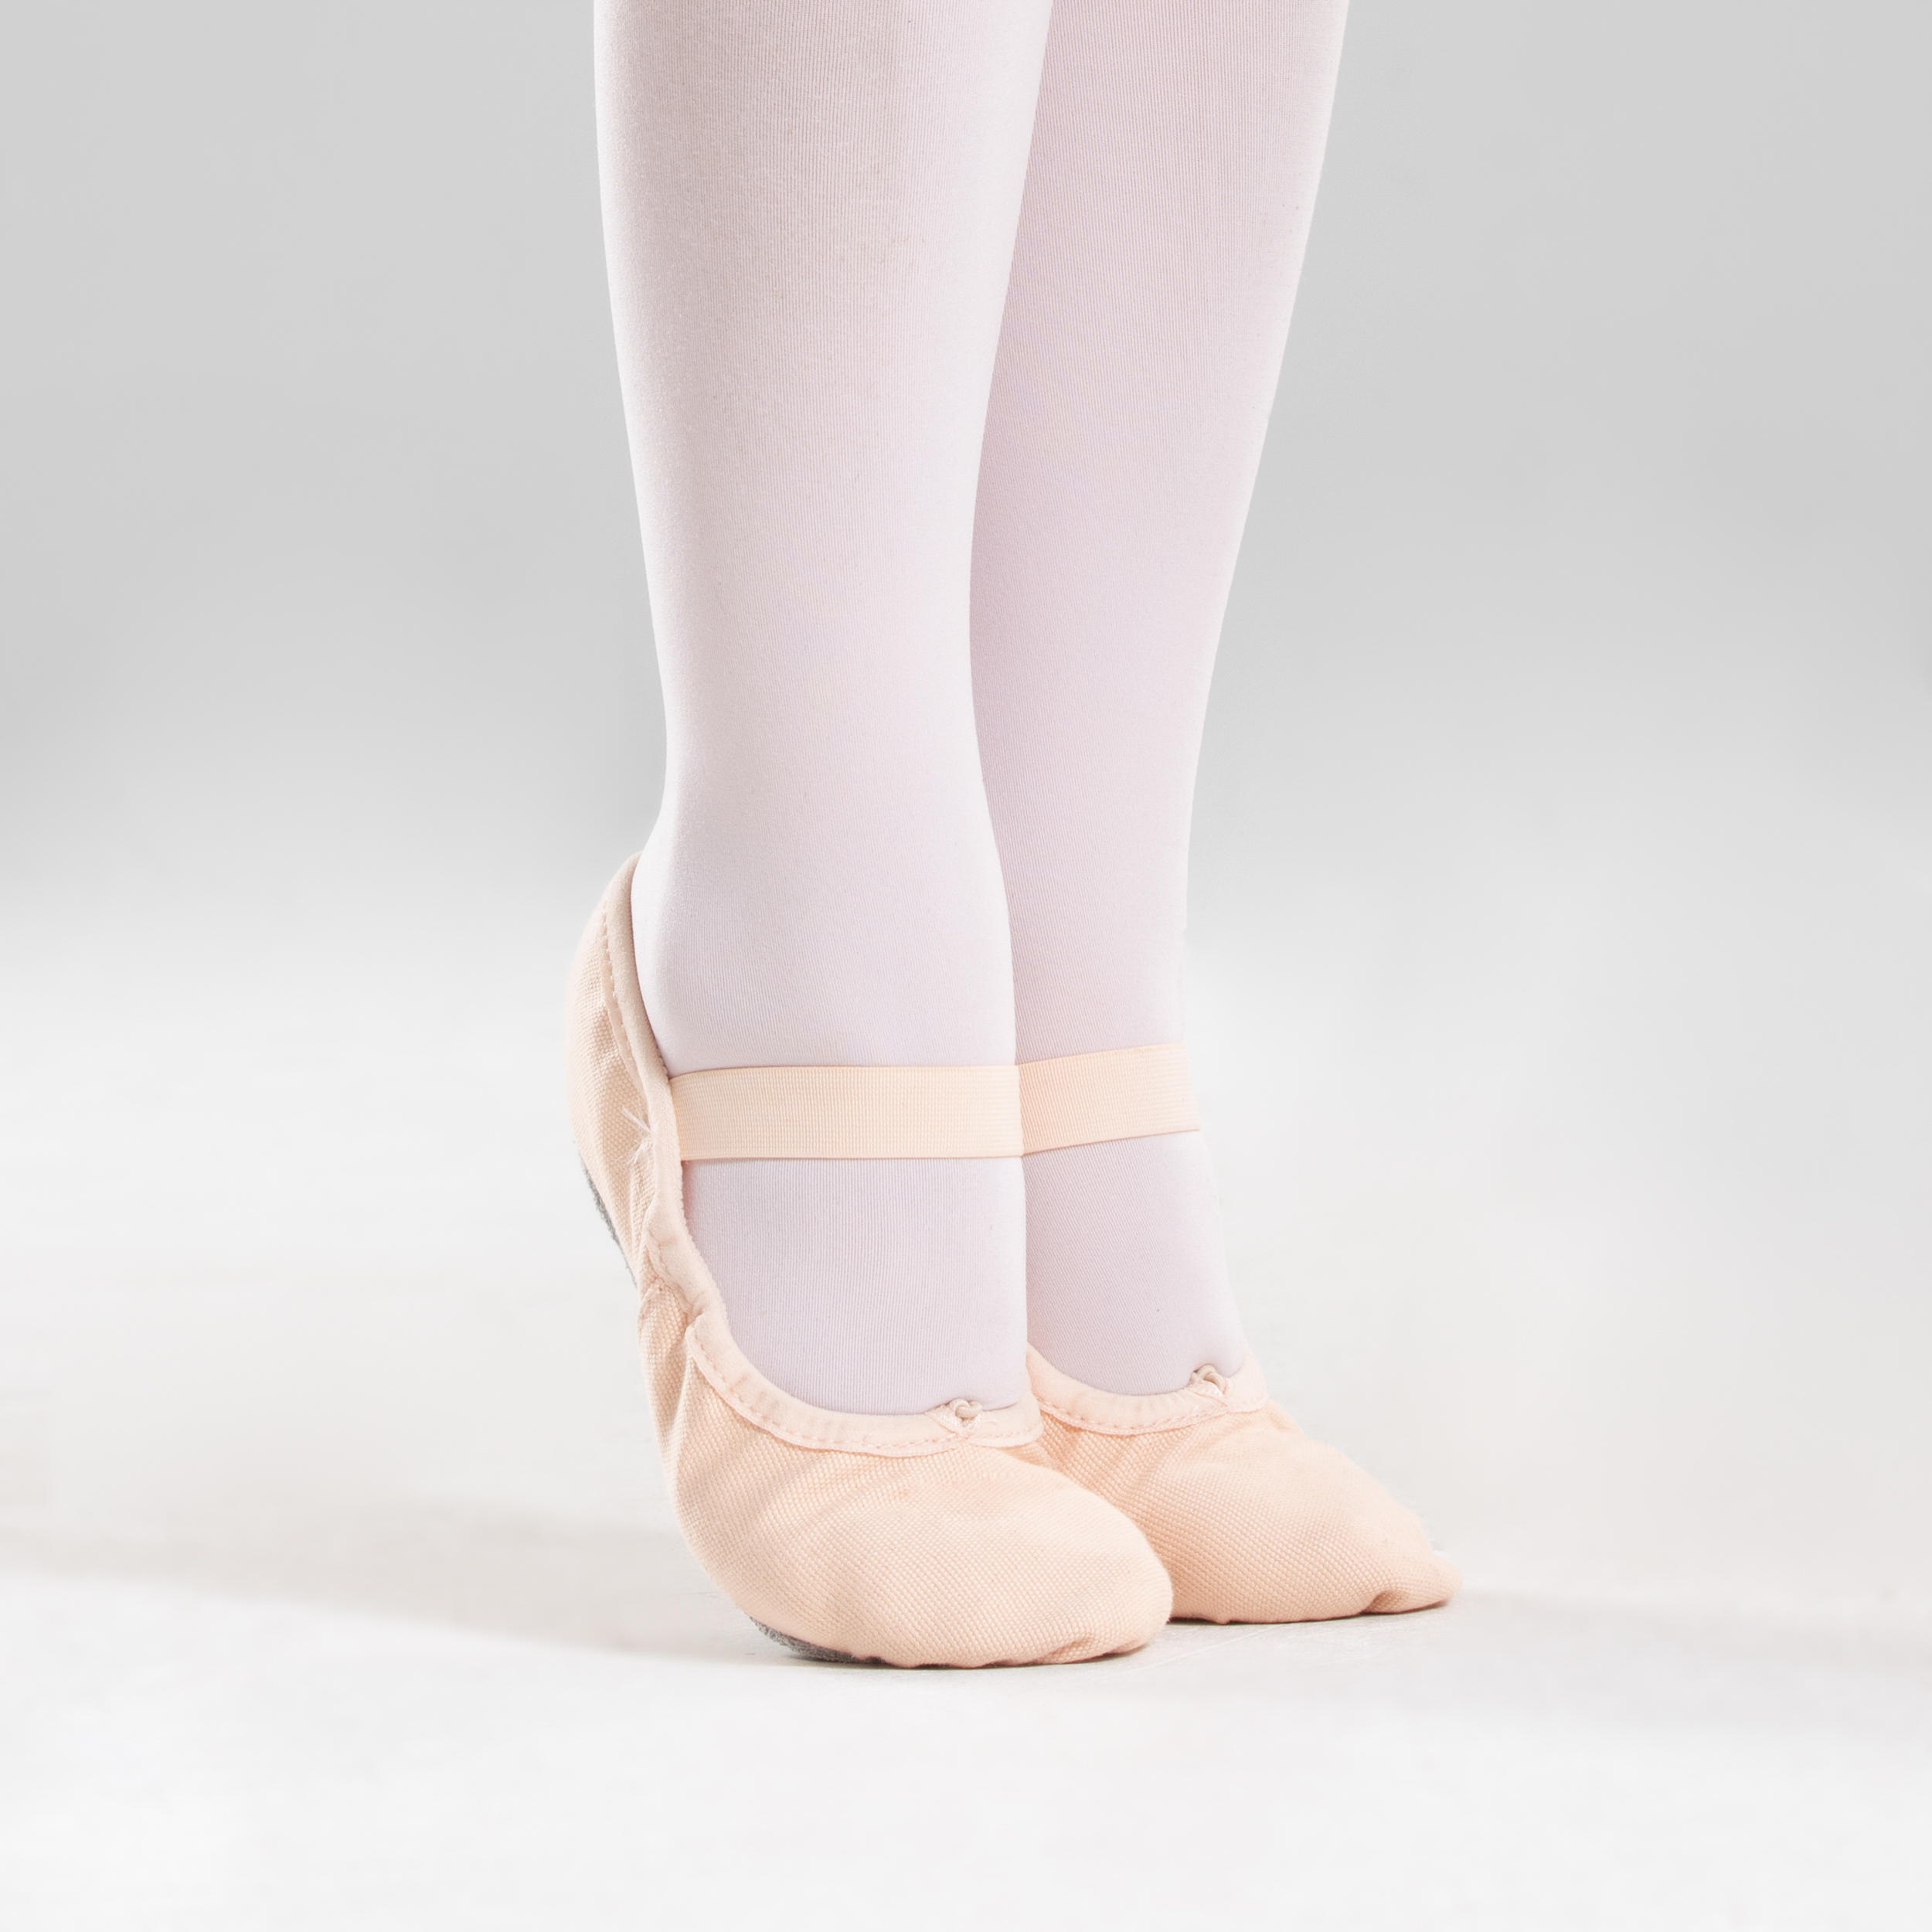 decathlon ballet shoes